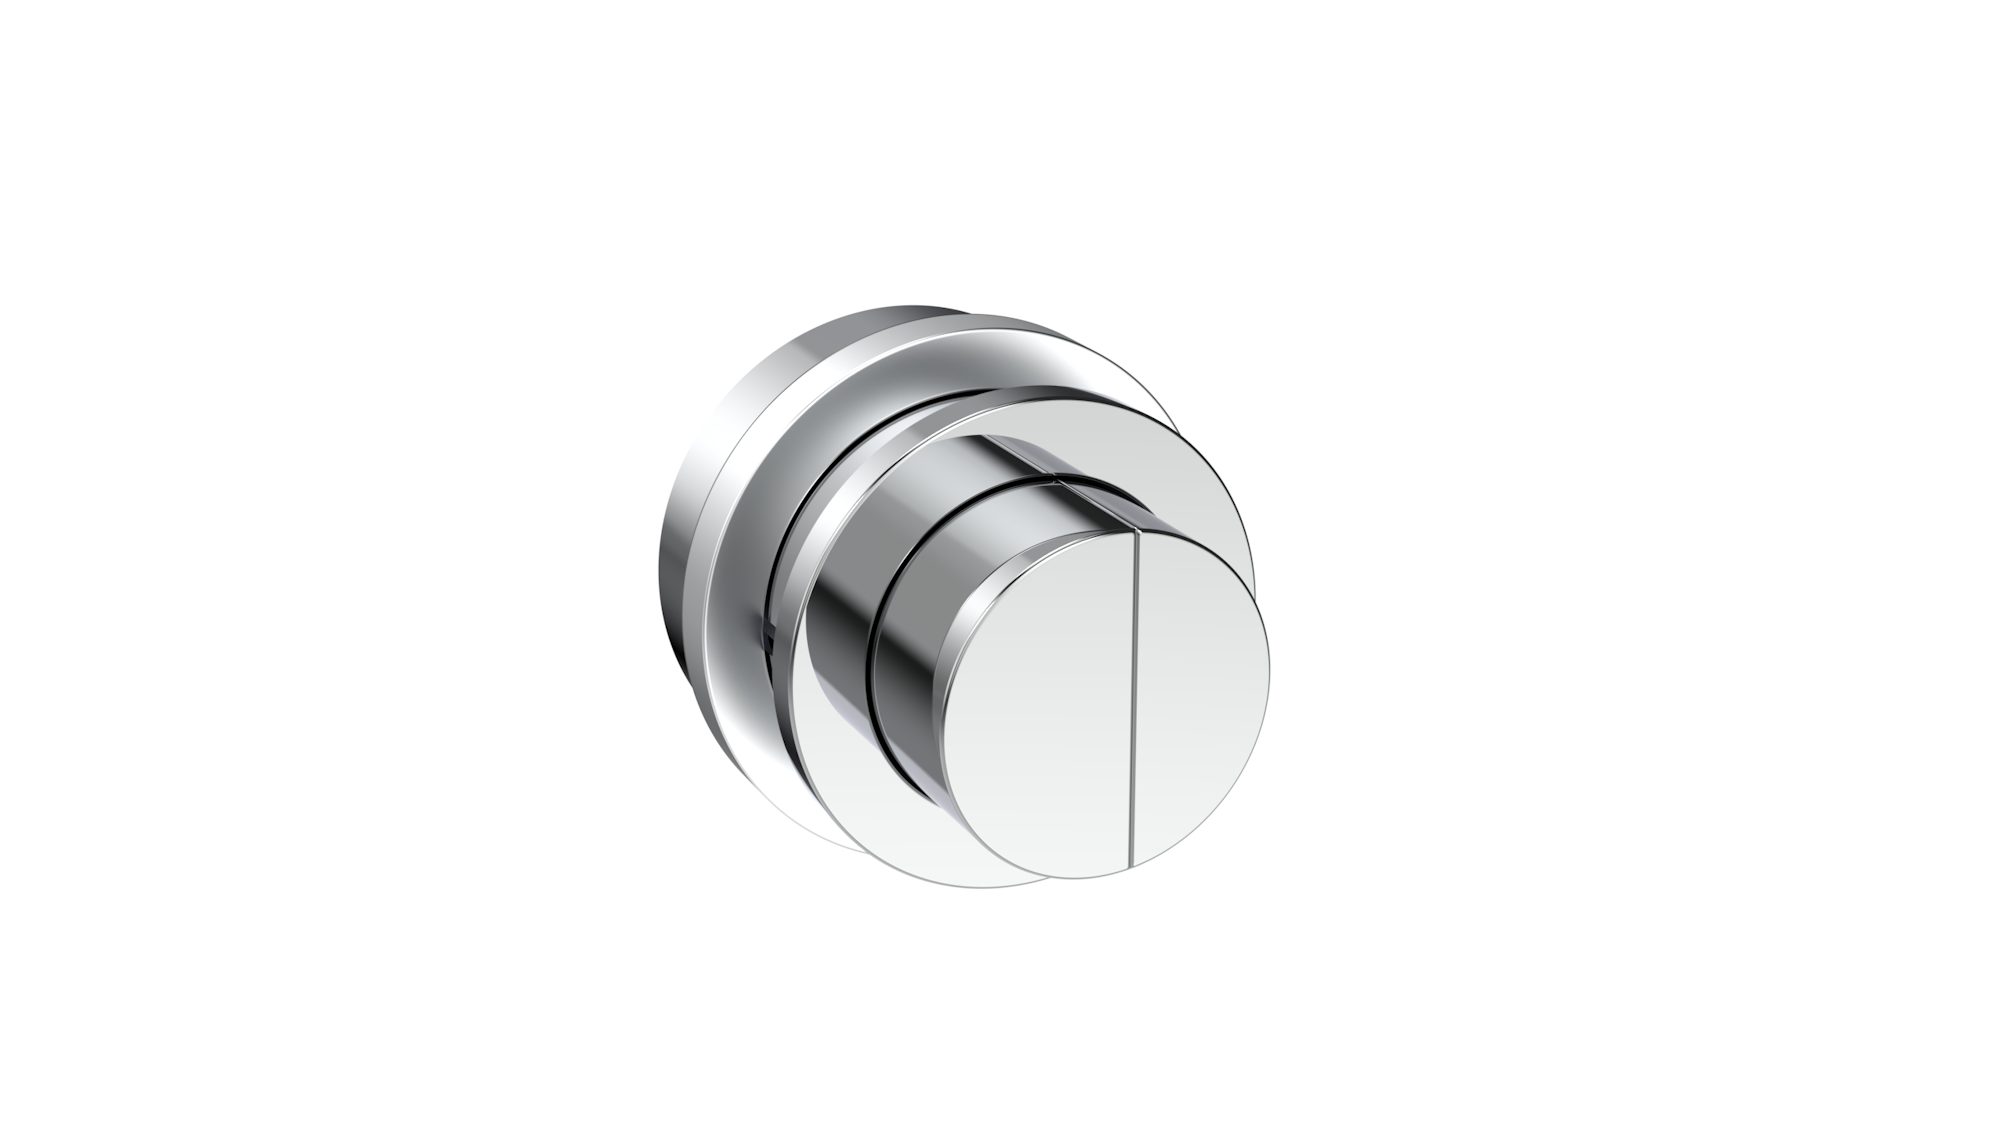 FLUSHE 2.0 brass flush button (for HC2030) - Chrome